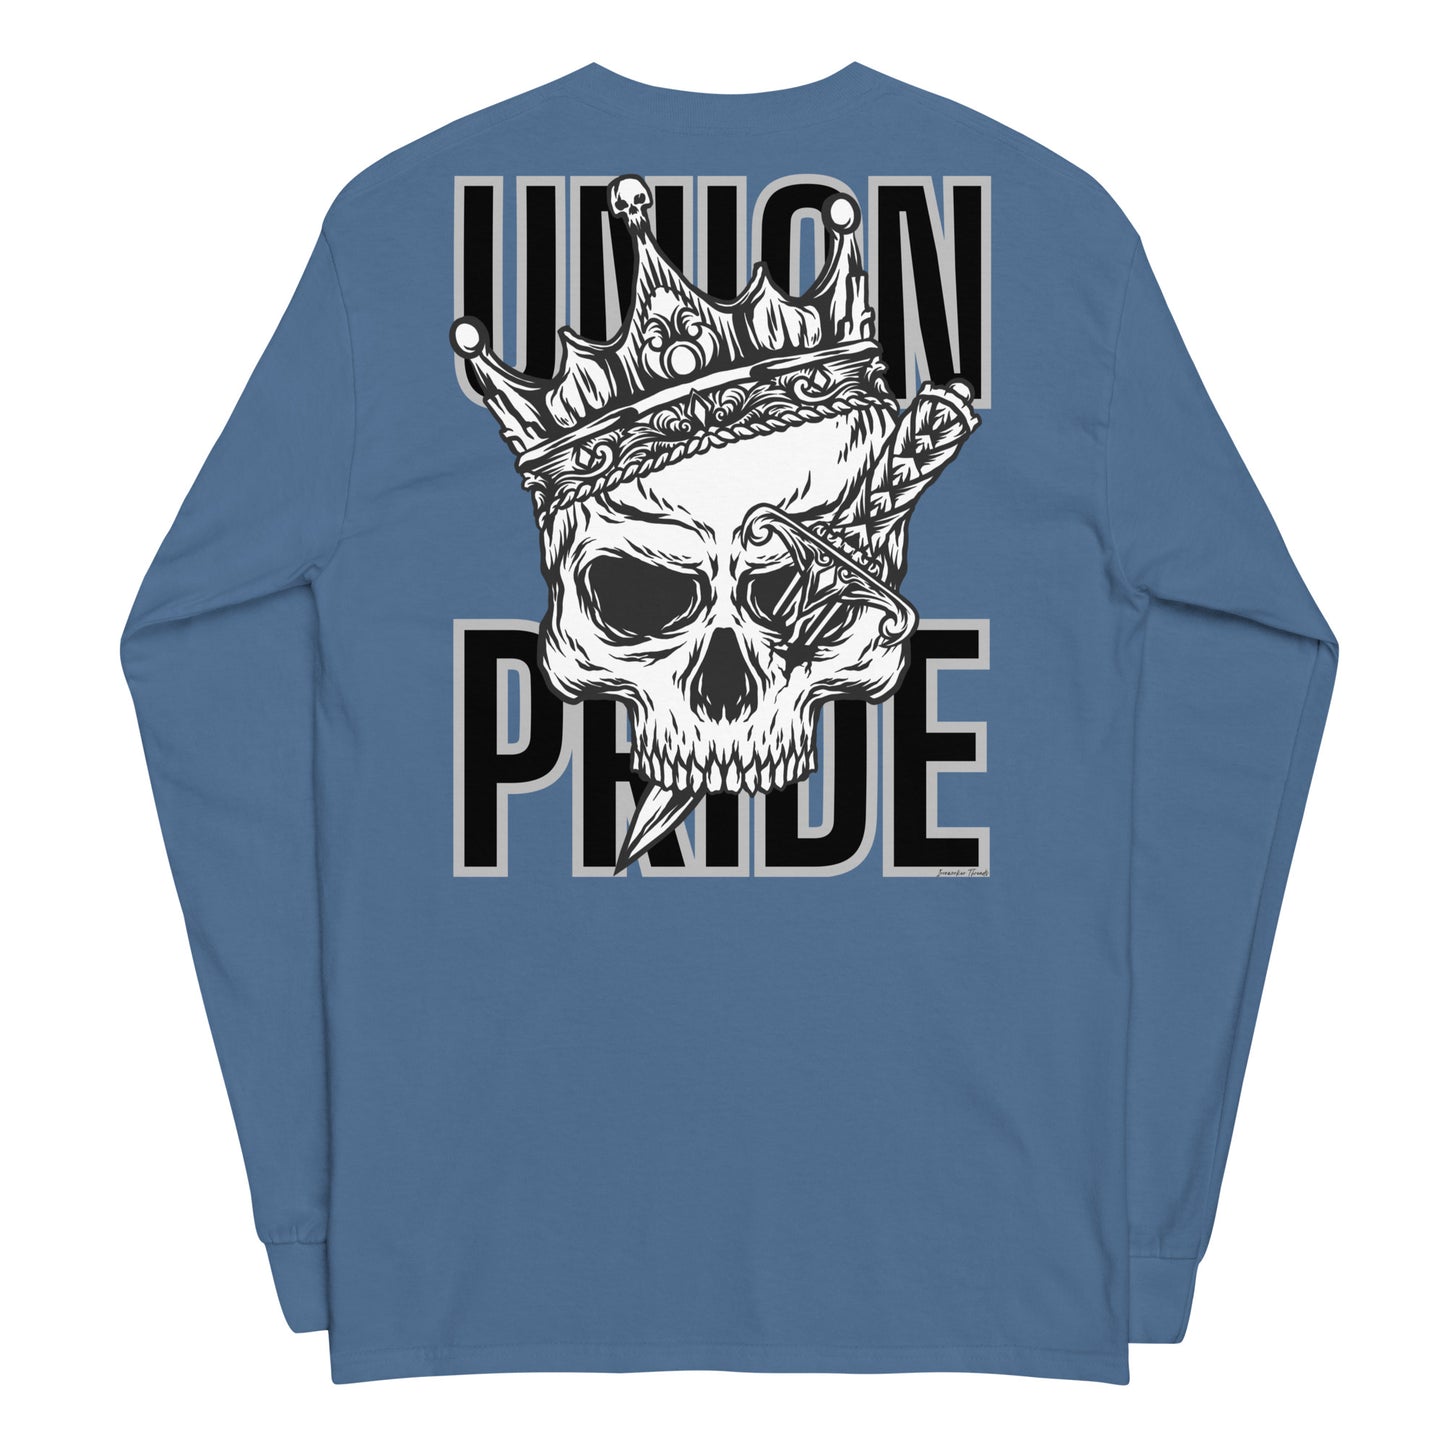 Union Pride Long Sleeve Shirt